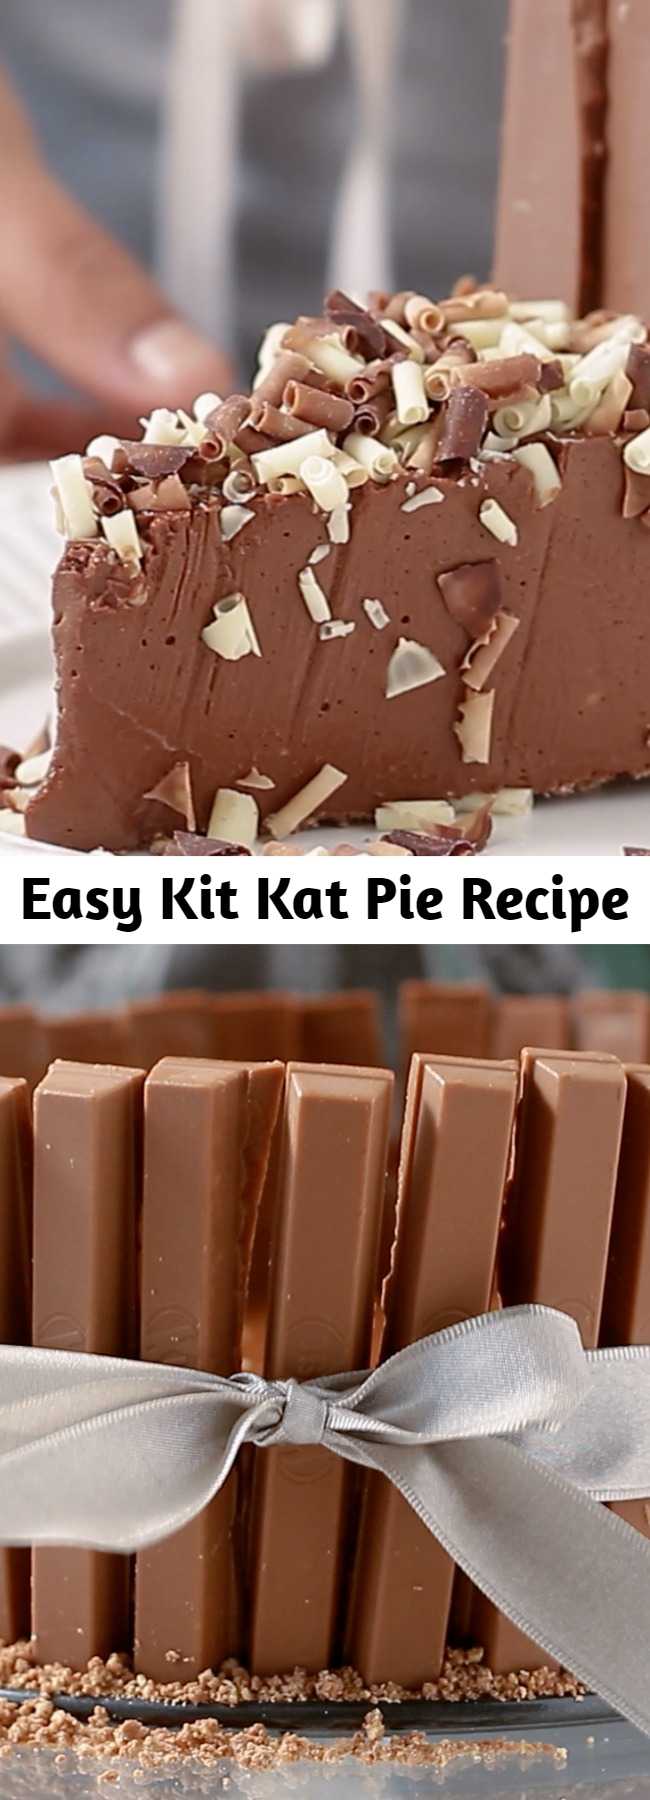 Easy Kit Kat Pie Recipe - Indulge with this creamy, chocolatey Kit Kat Pie! It will guarantee seconds. #chocolate #pie #kitkat #baking